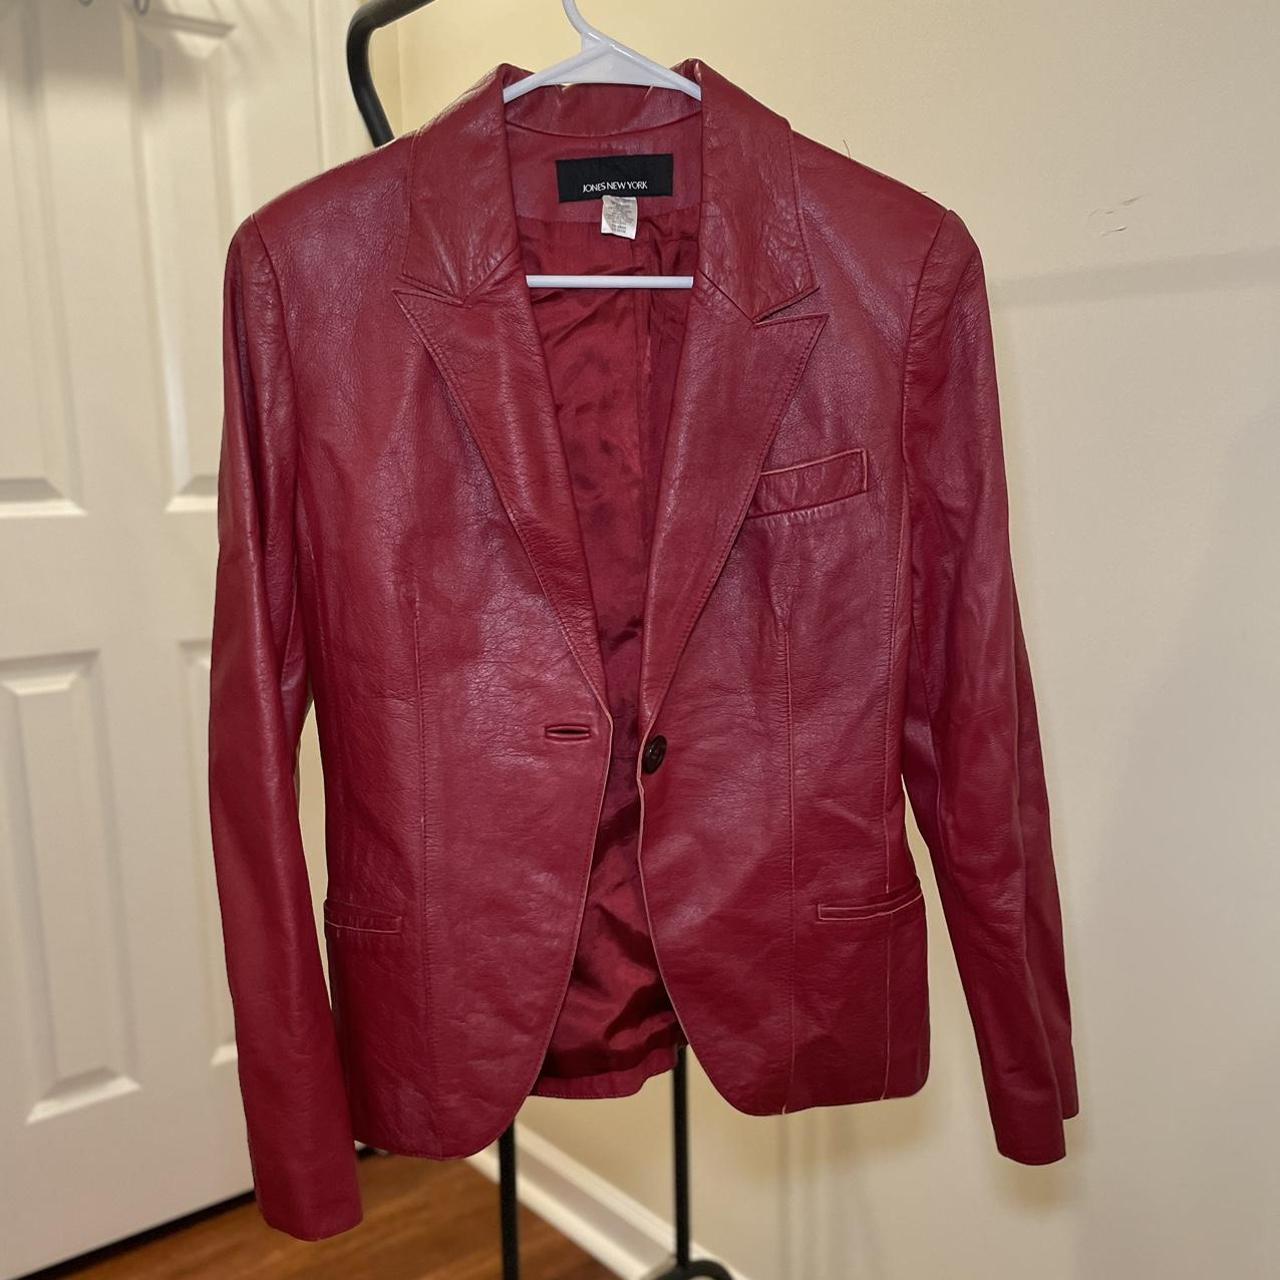 JONES NEW YORK RED LEATHER JACKET - genuine leather... - Depop